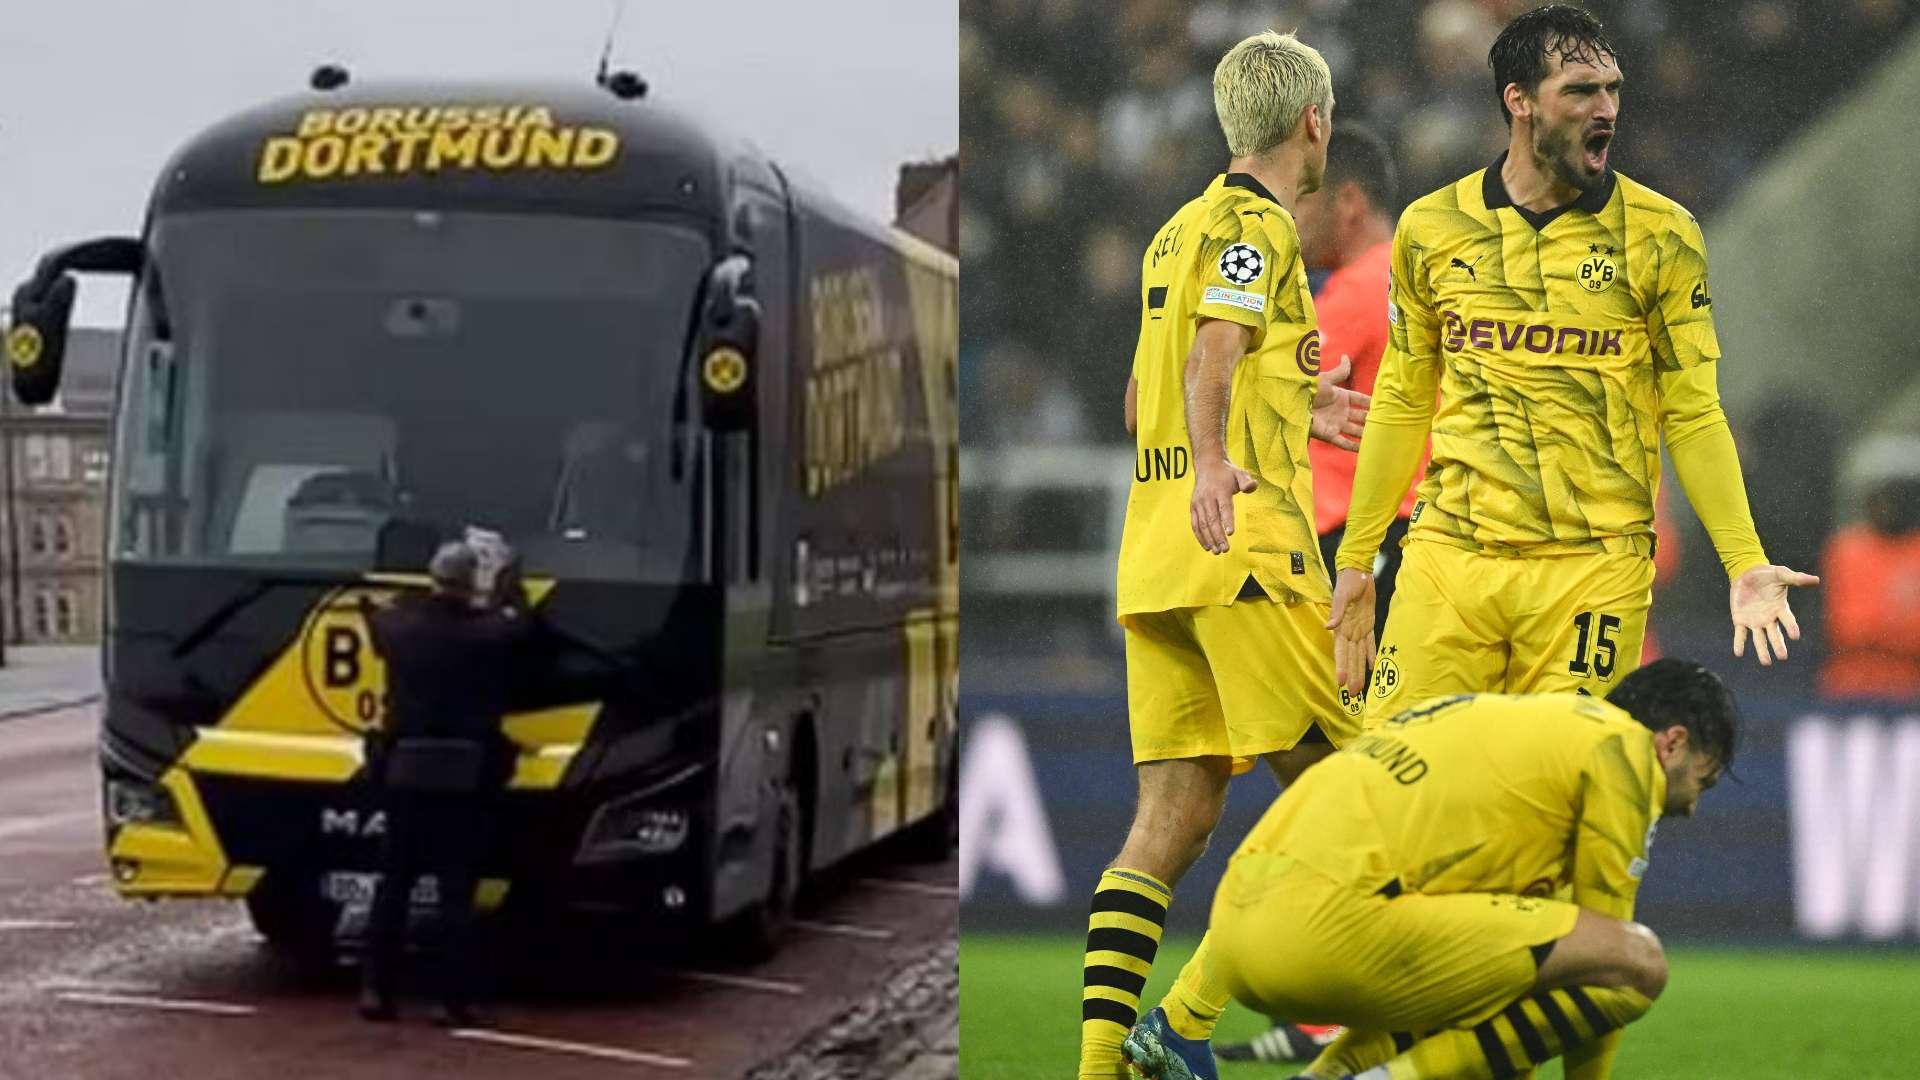 Dortmund bus Newcastle